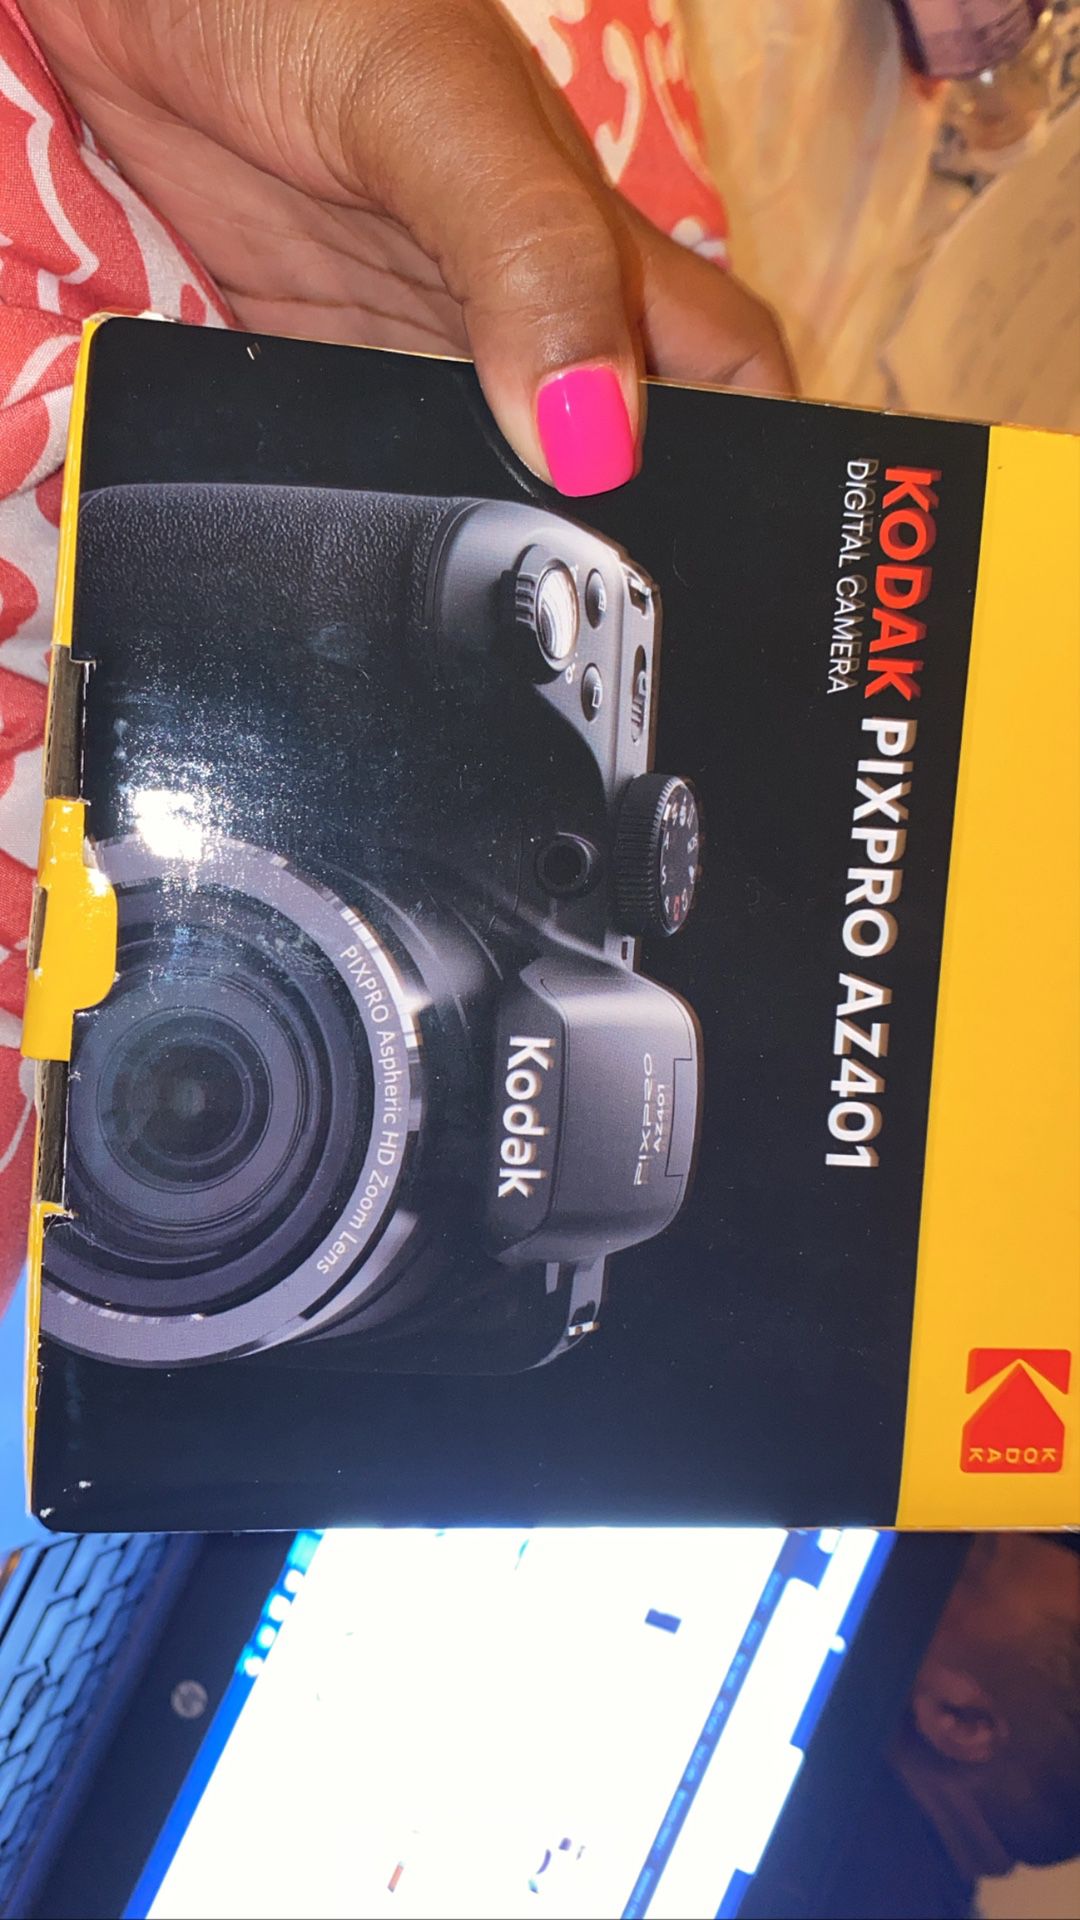 Brand new Kodak Camera